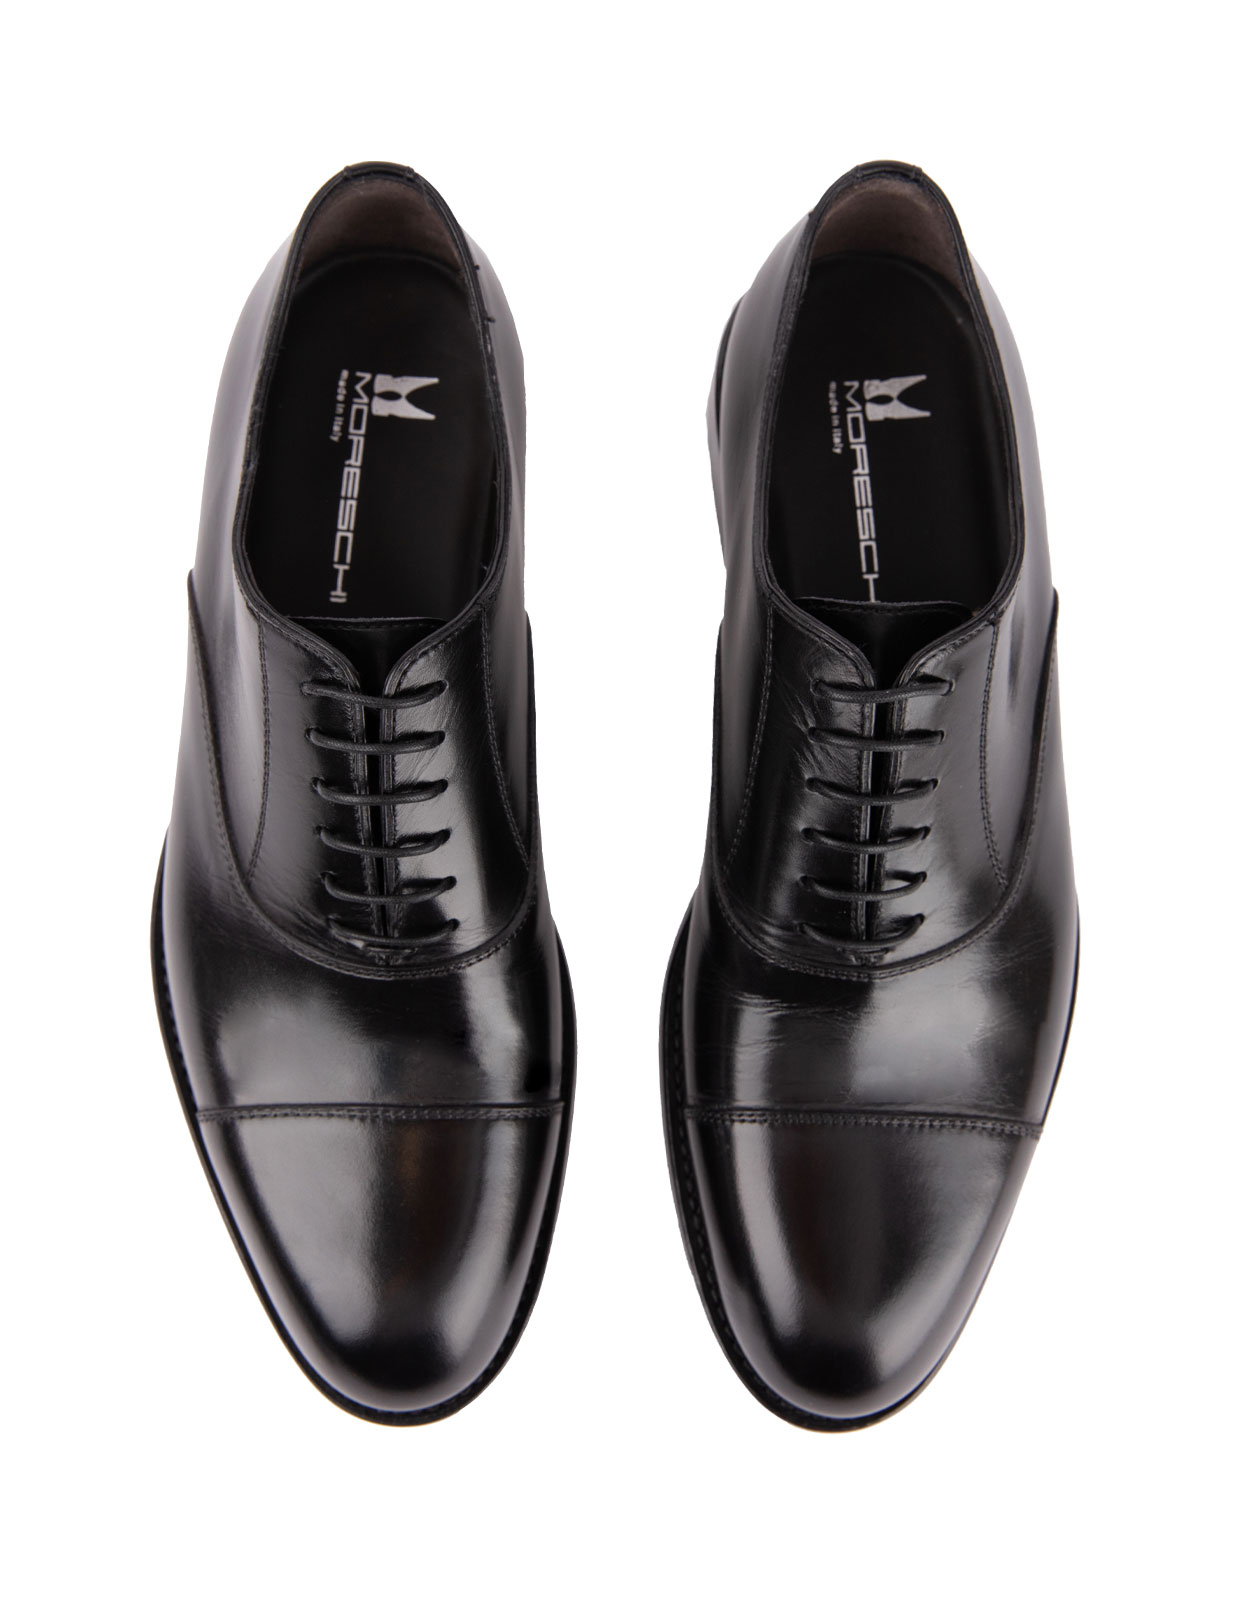 Cleveland Oxford Shoes Black Stl 10